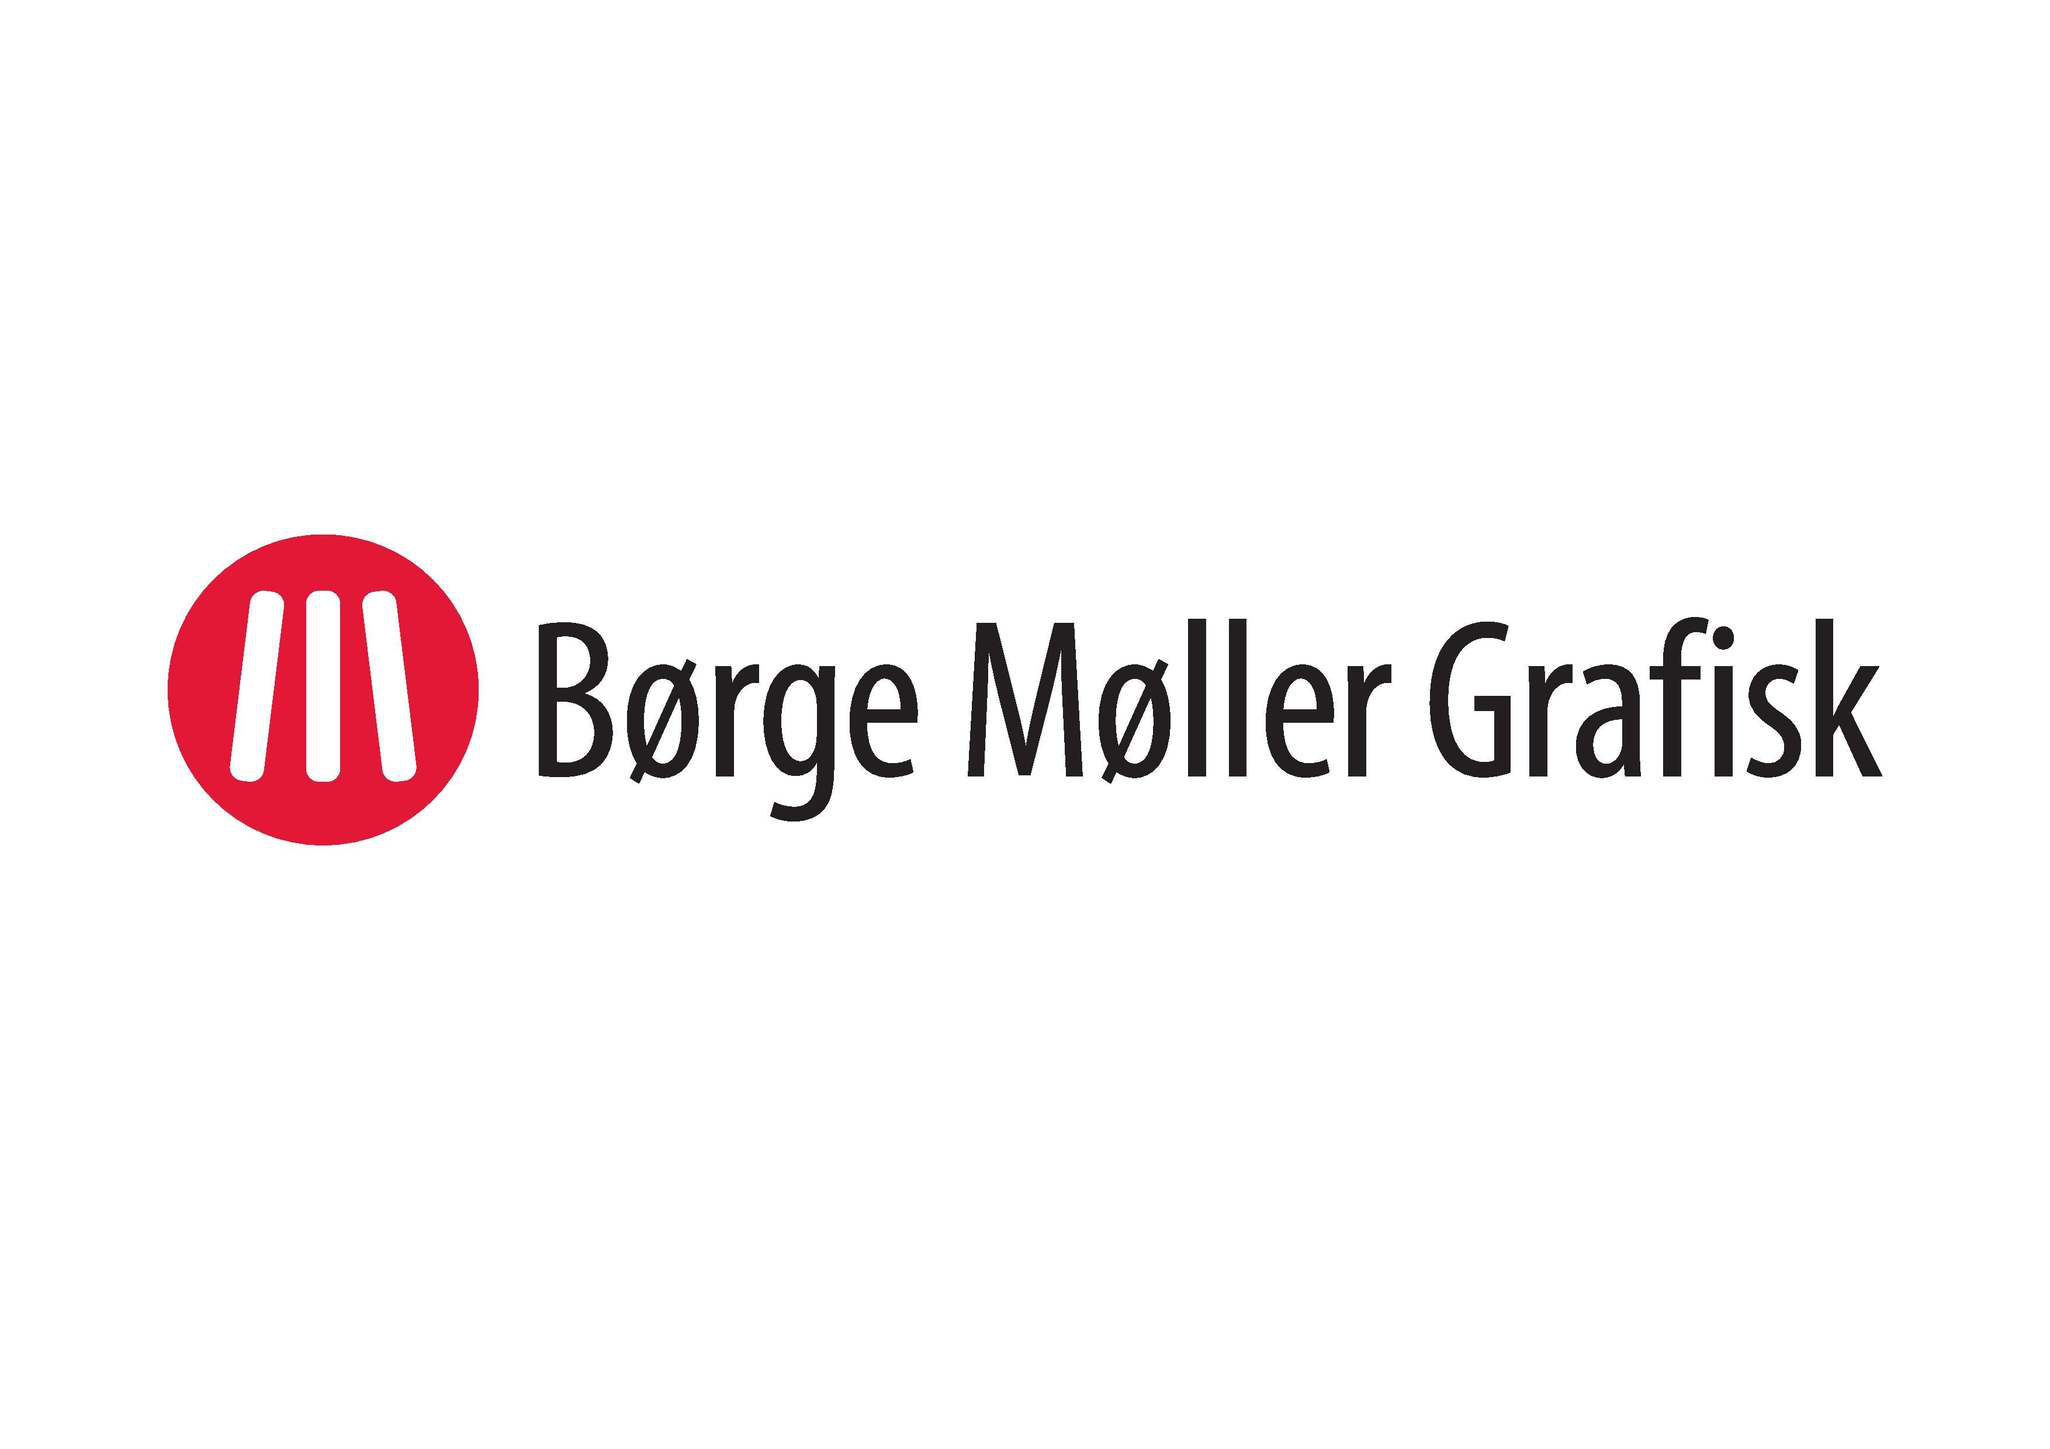 Børge Møller Grafisk logo